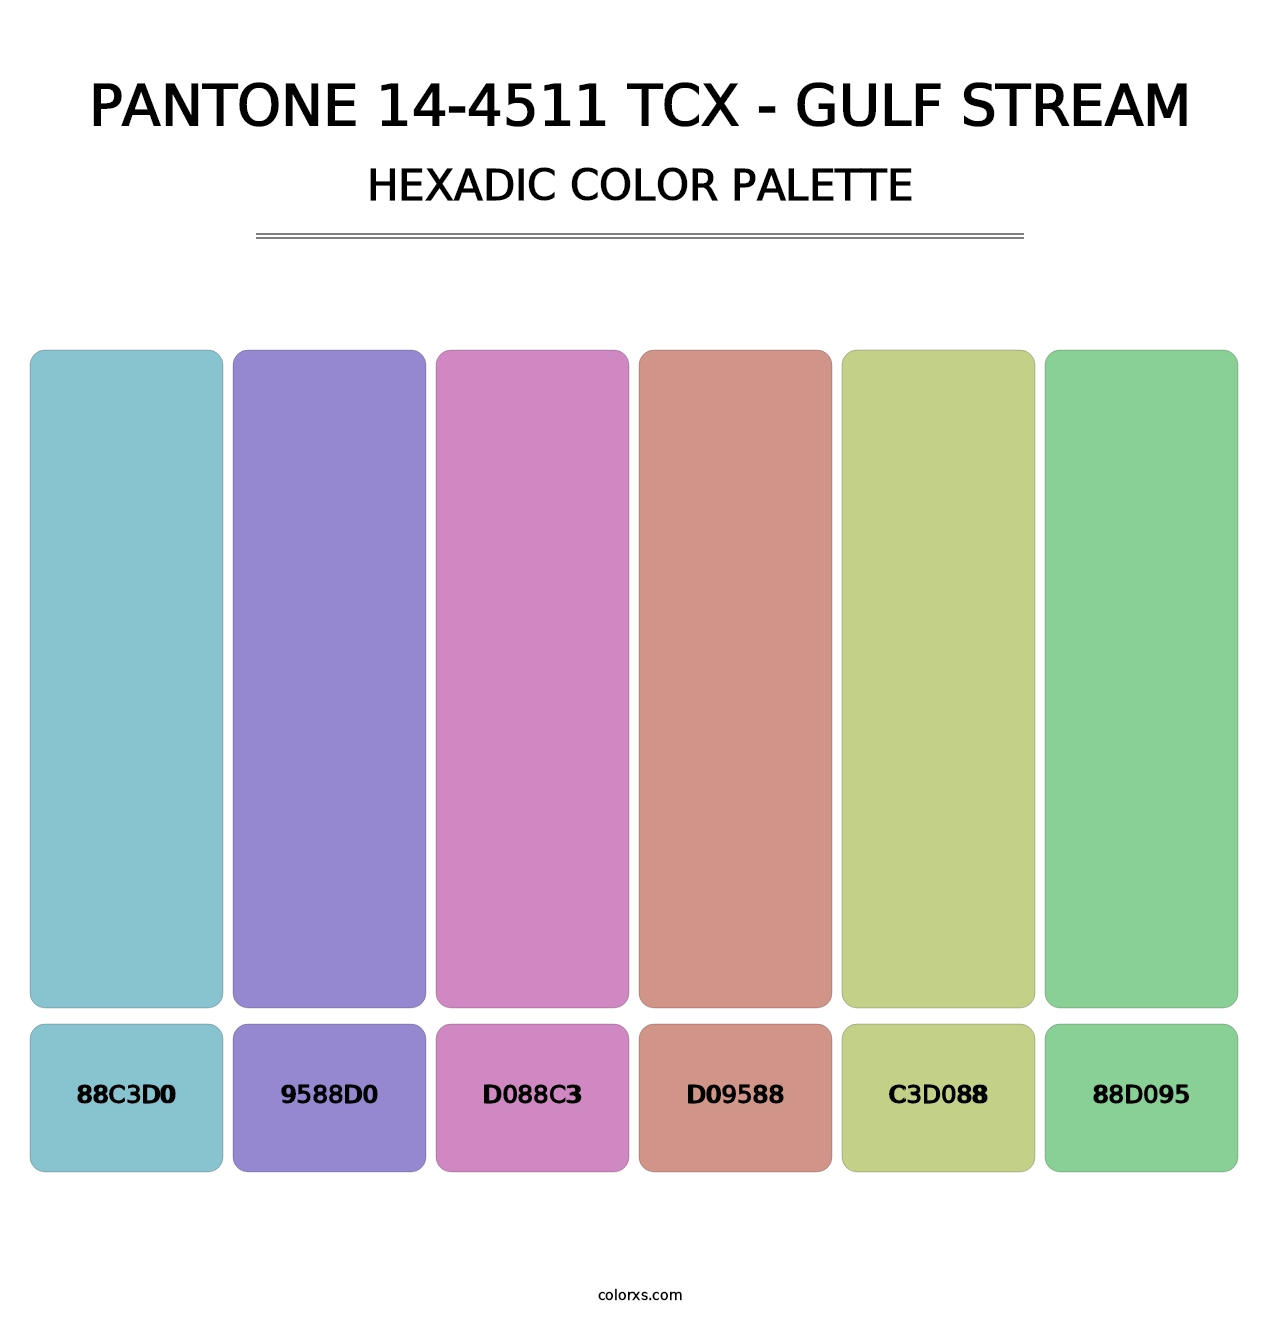 PANTONE 14-4511 TCX - Gulf Stream - Hexadic Color Palette